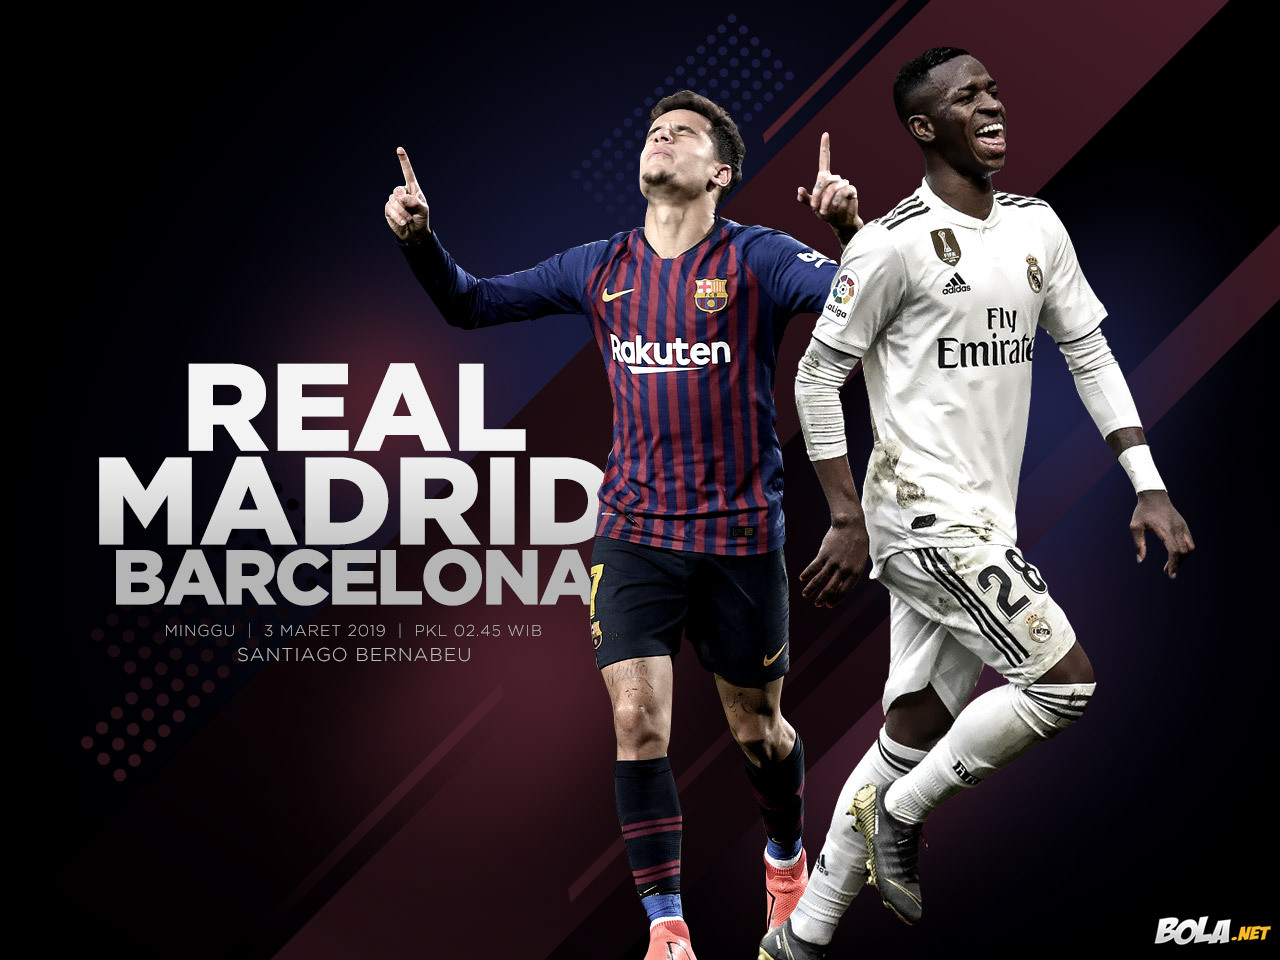 Deskripsi : Wallpaper Real Madrid Vs Barcelona, size: 1280x960